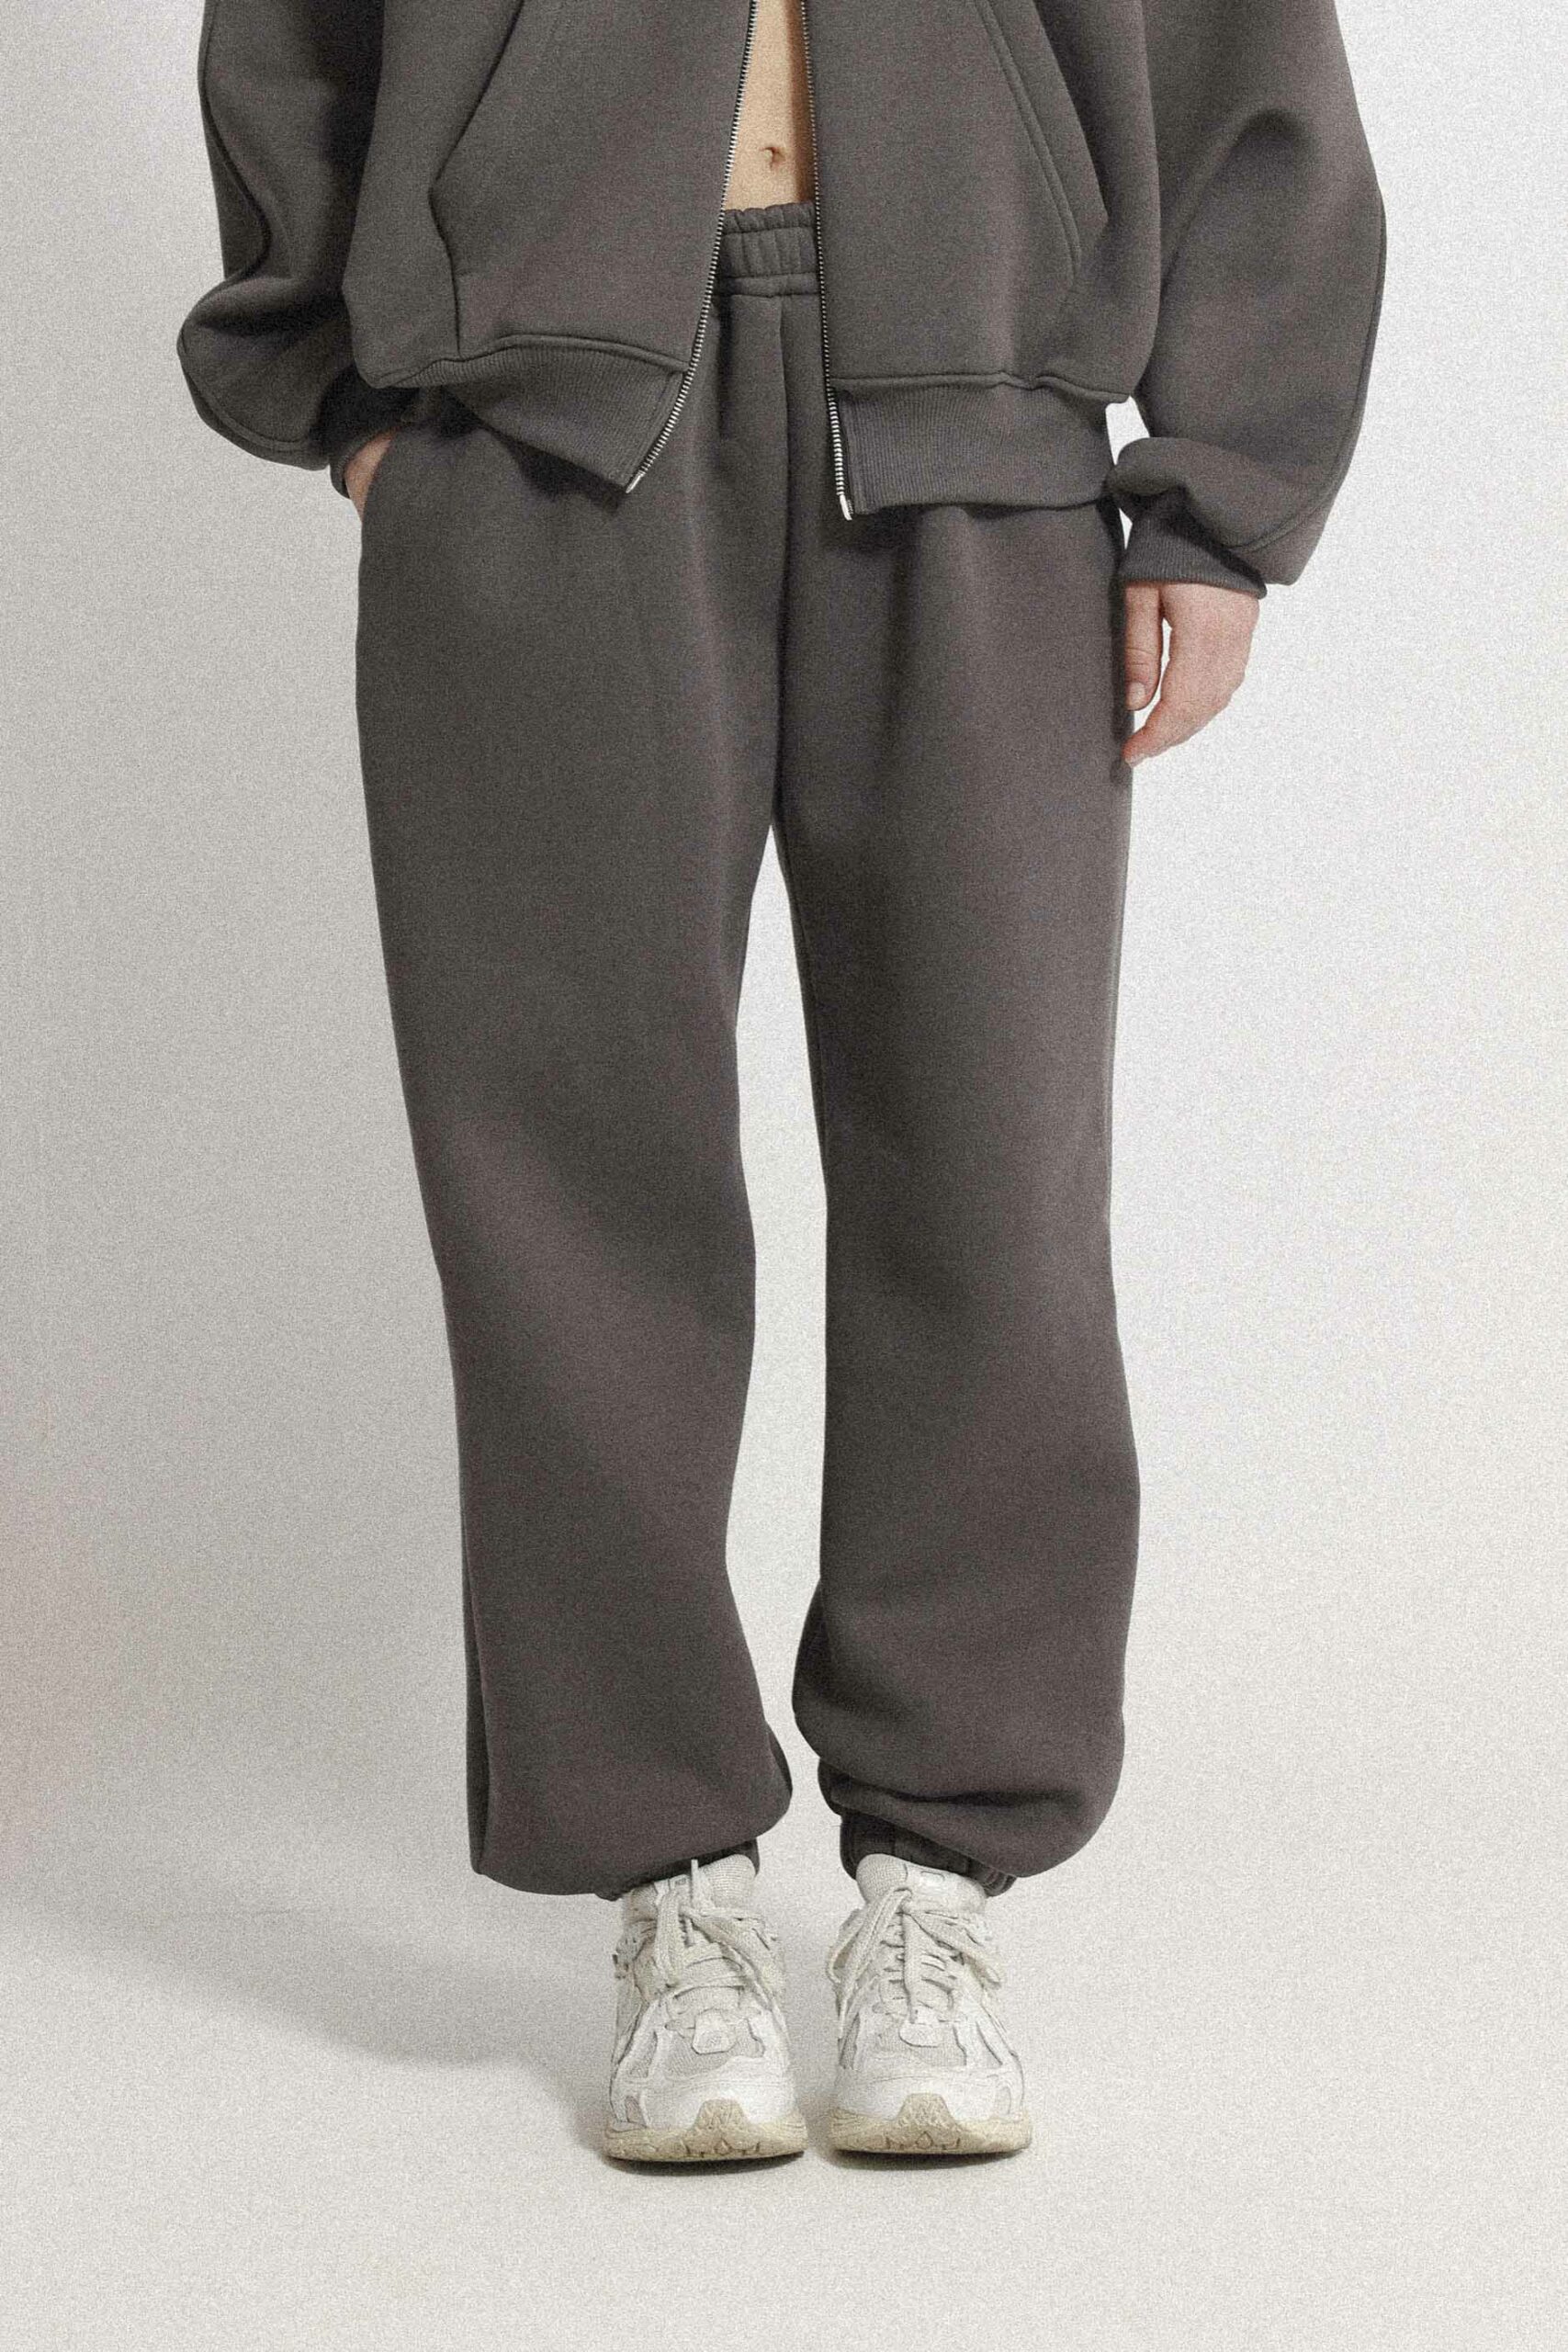 retro dark grey baggy sweatpants – STALKER ANGEL